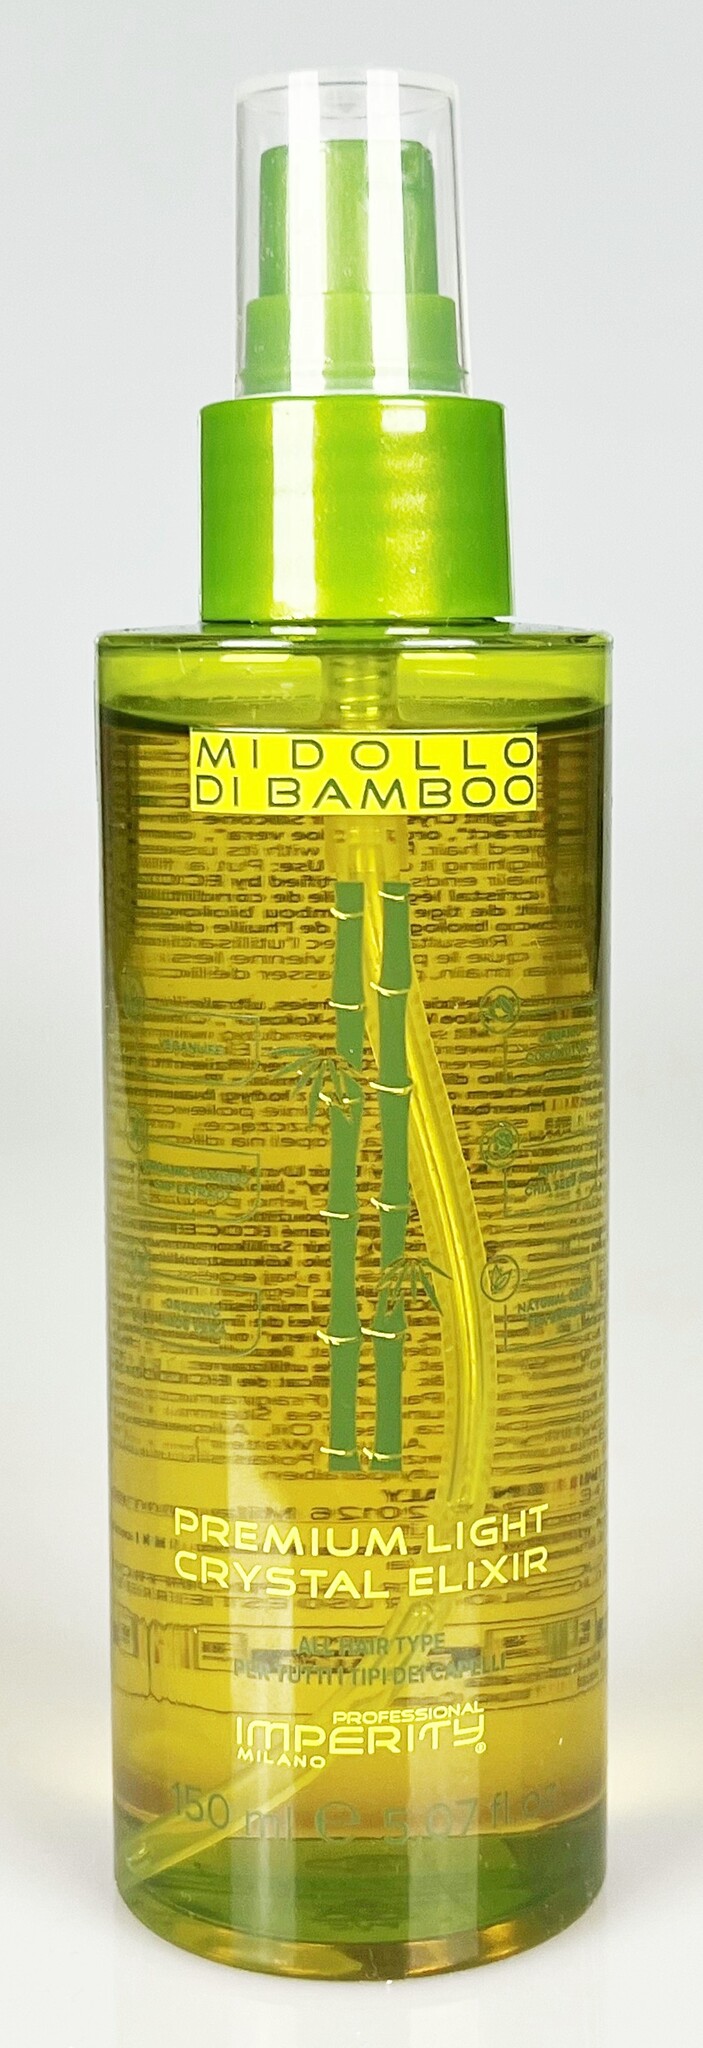 Imperity Midollo Premium light Crystal Elixir, 150 ml